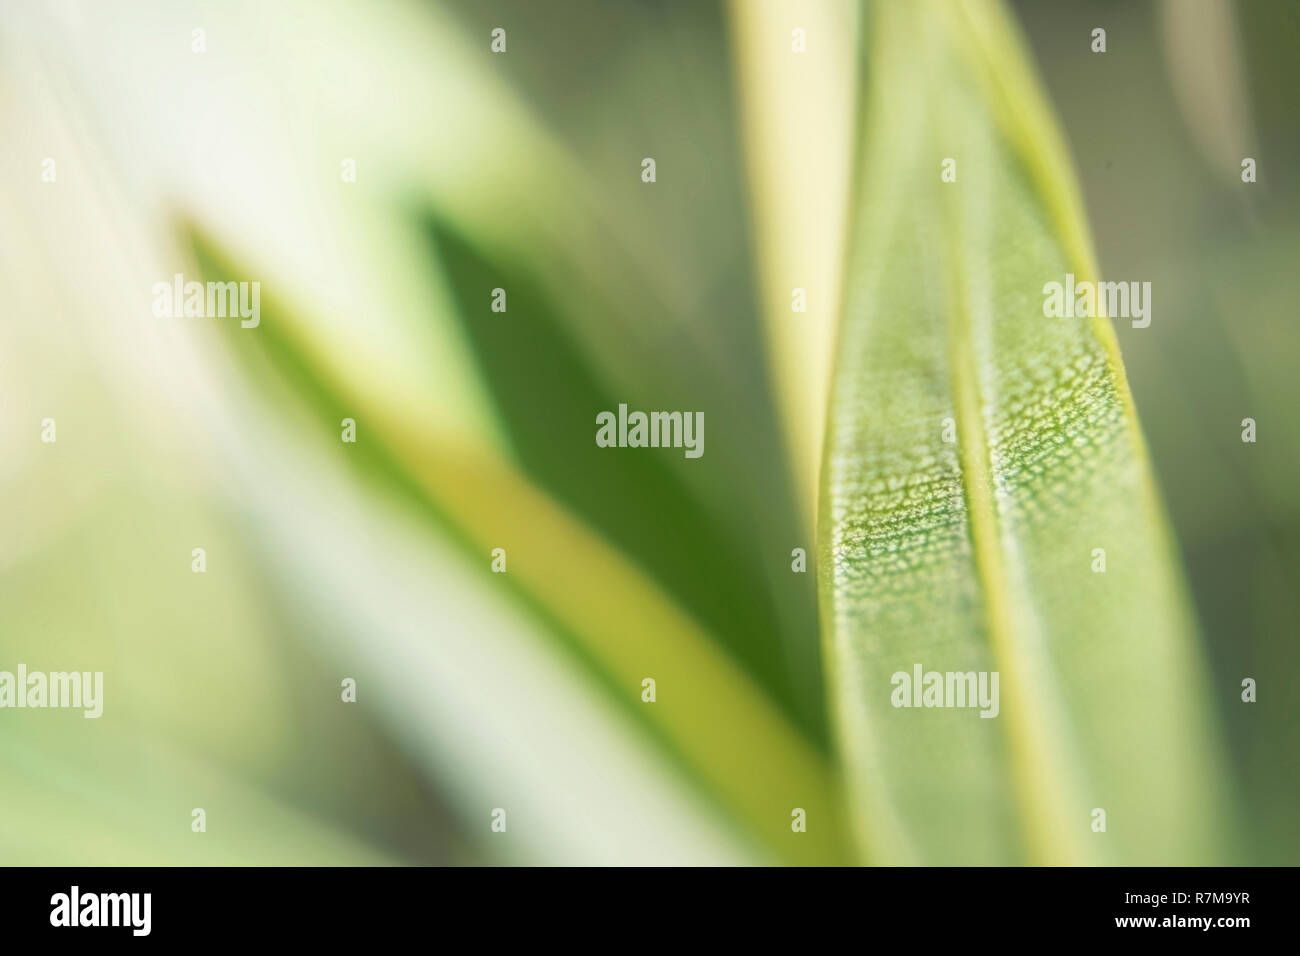 Verde lunga colata sottile trama di foglie in striature macroshooting Foto Stock